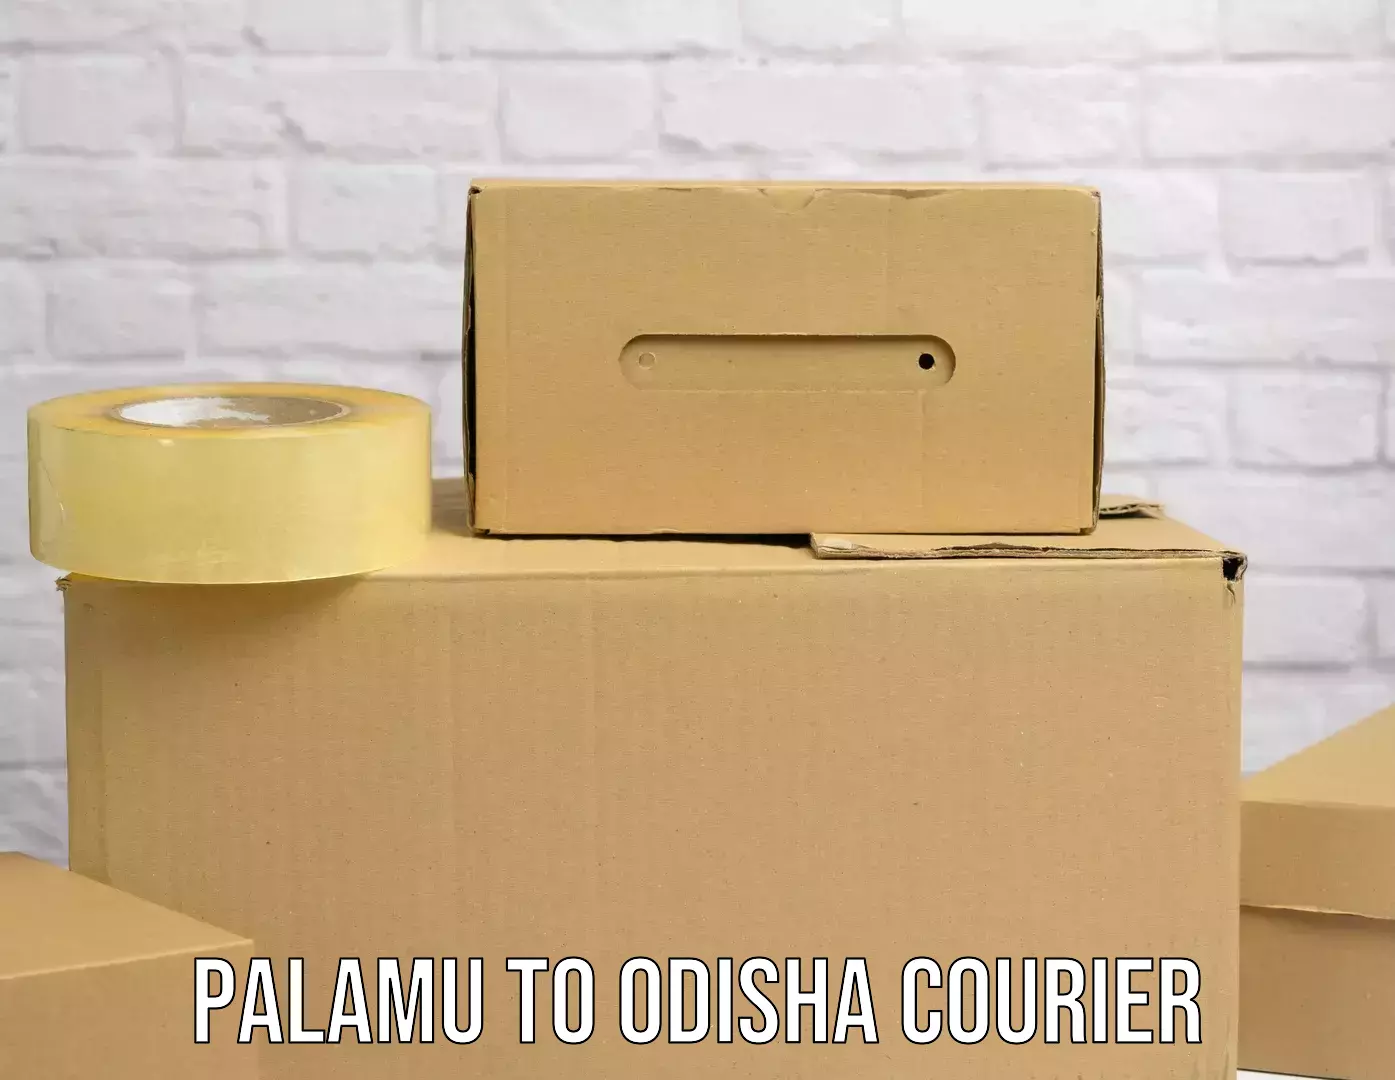 On-call courier service Palamu to Kupari